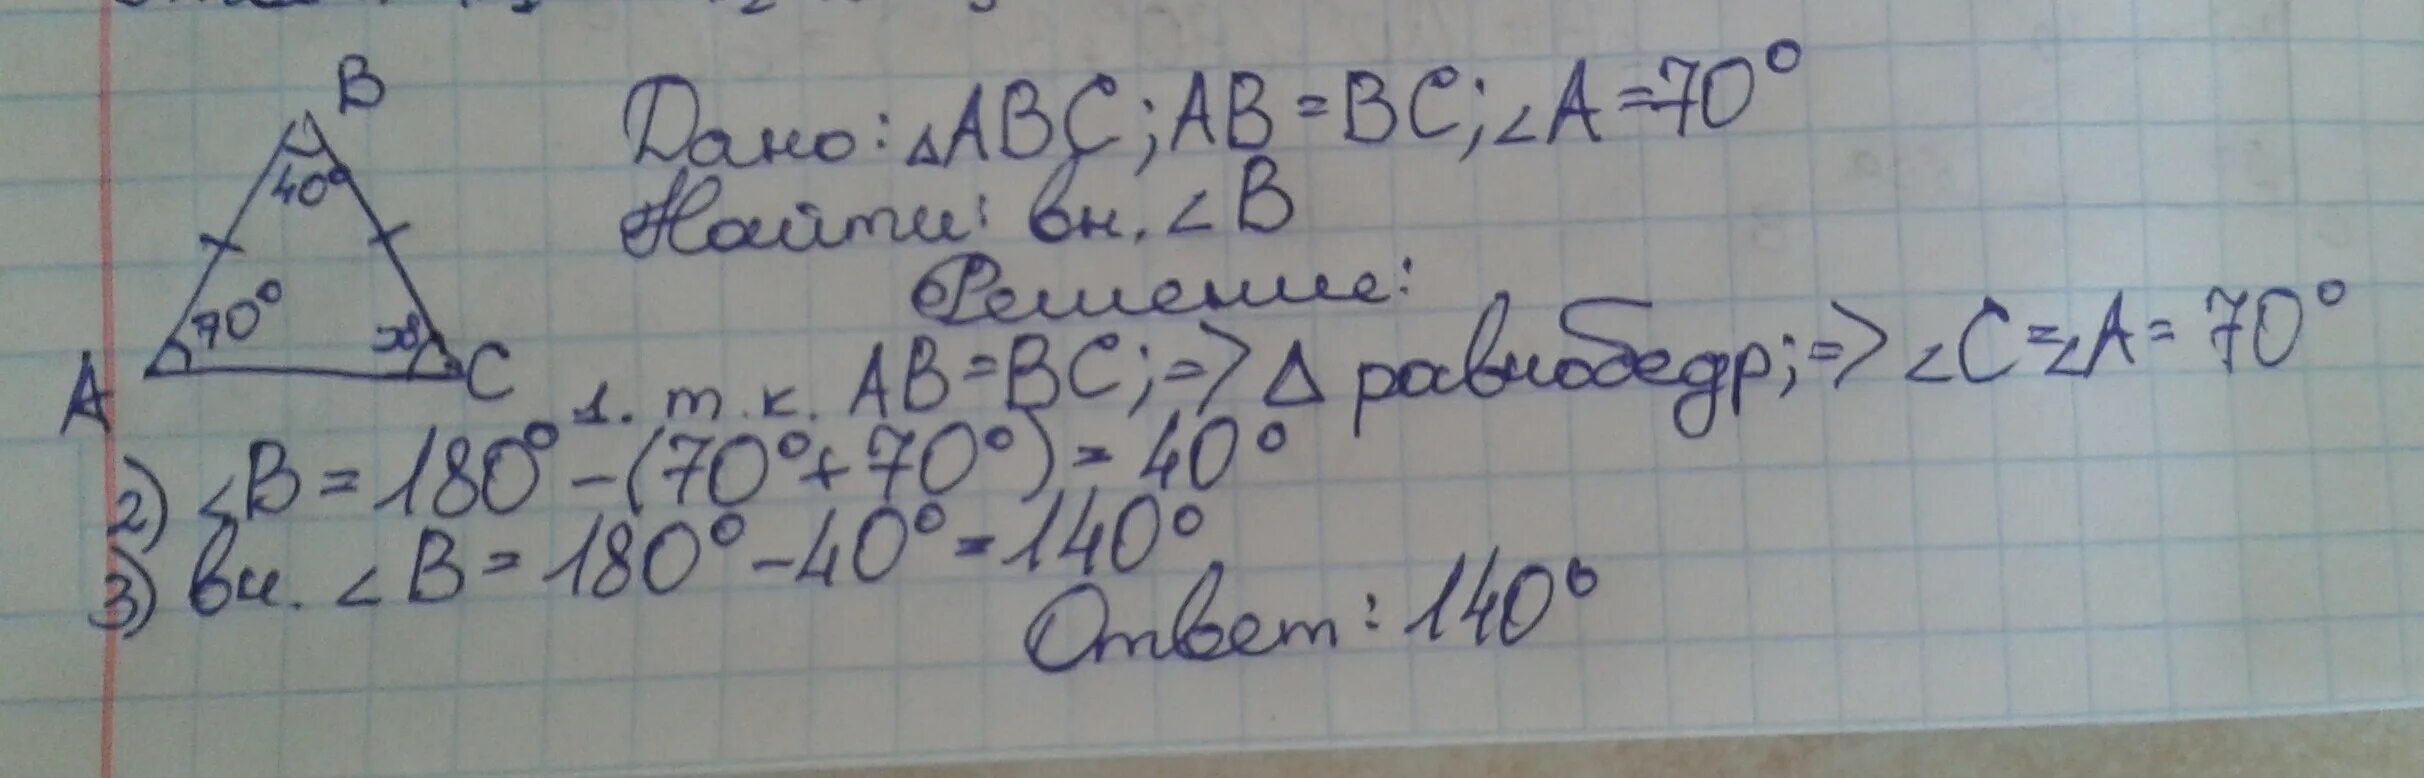 Ab равно 12 сантиметров найти bc. В ABC ab 12 BC 18. В треугольнике ABC ab 12 BC 18 угол b 70 а в треугольнике MNK MN 6 NK 9 см n. Ab=12см BC=18см <b = 70. В треугольнике ABC ab 12см BC 18см угол b 70 градусов.